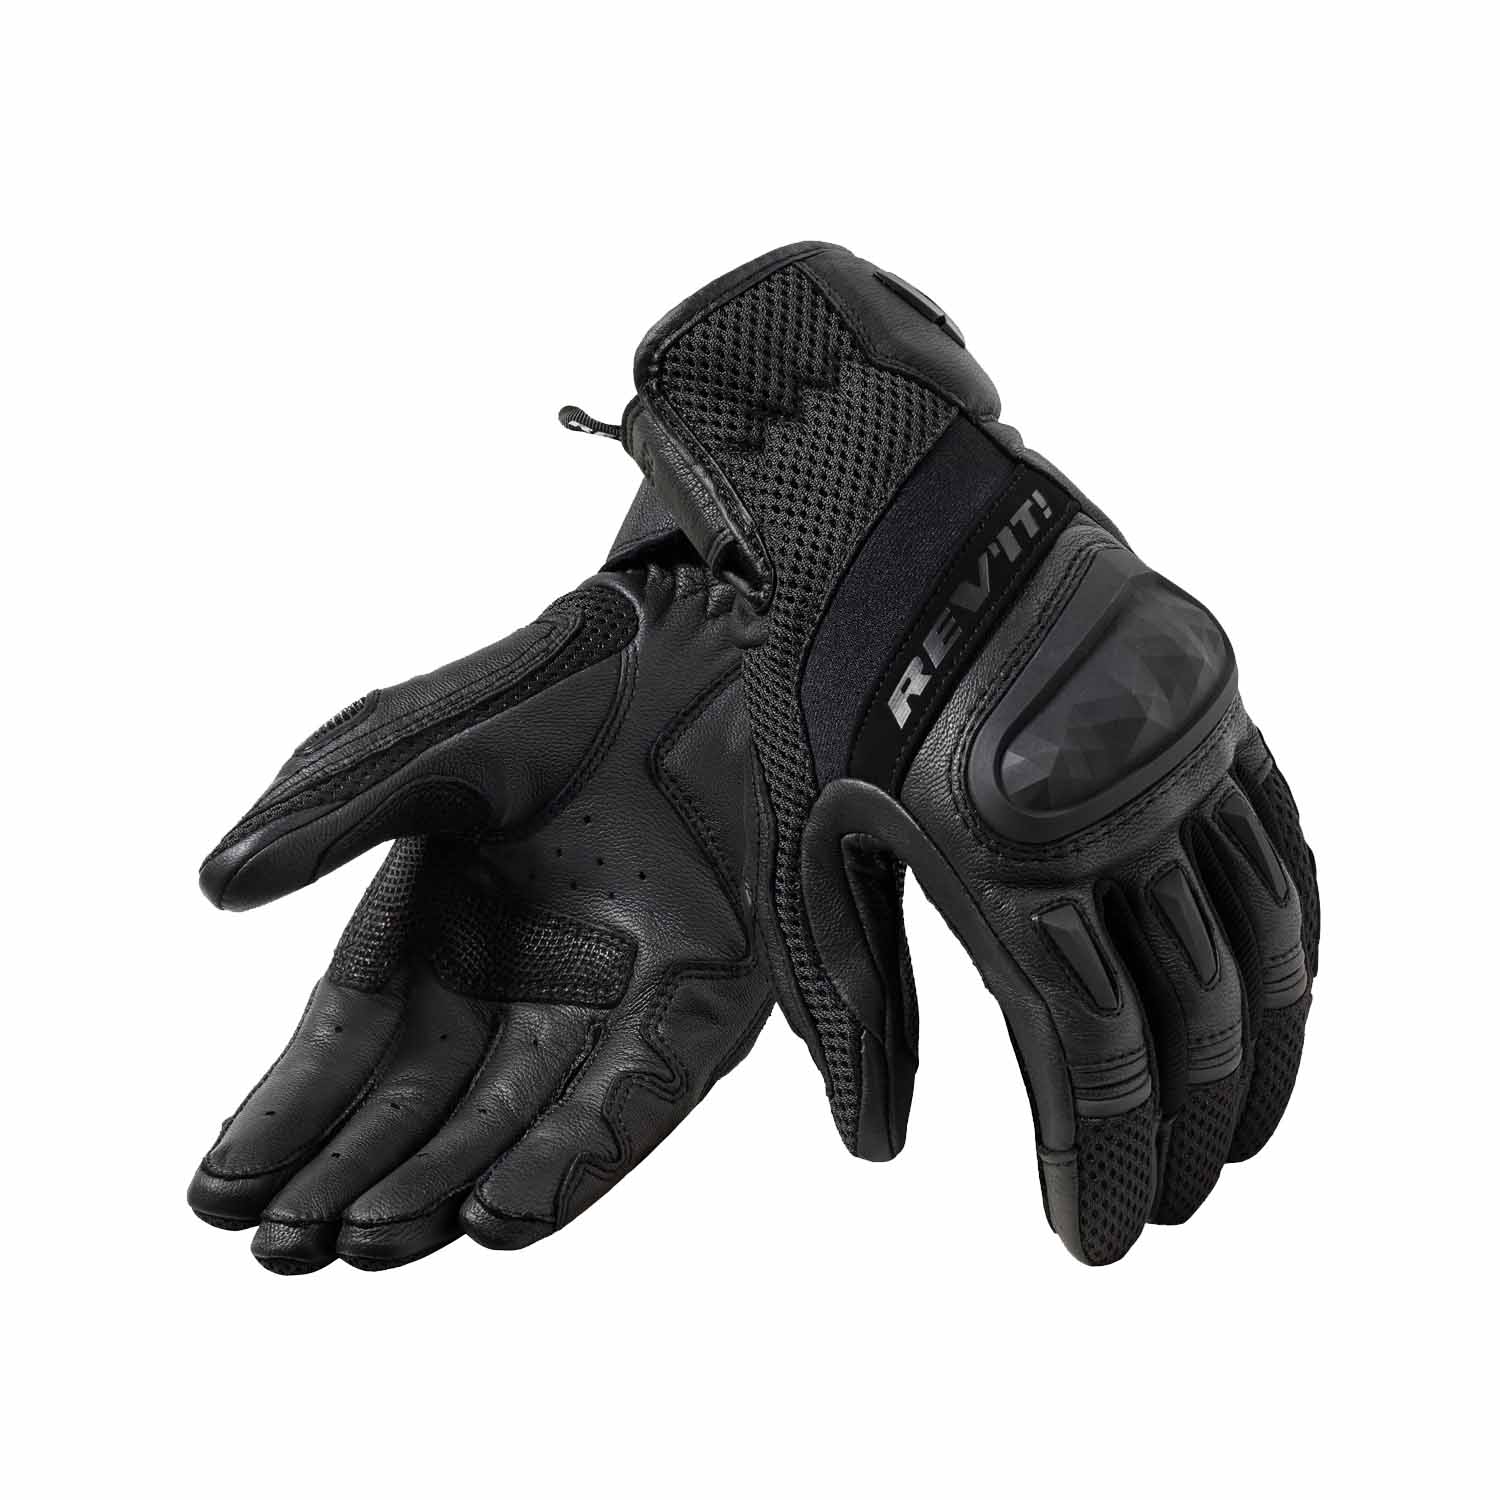 Image of REV'IT! Dirt 4 Gloves Ladies Black Size M ID 8700001378123